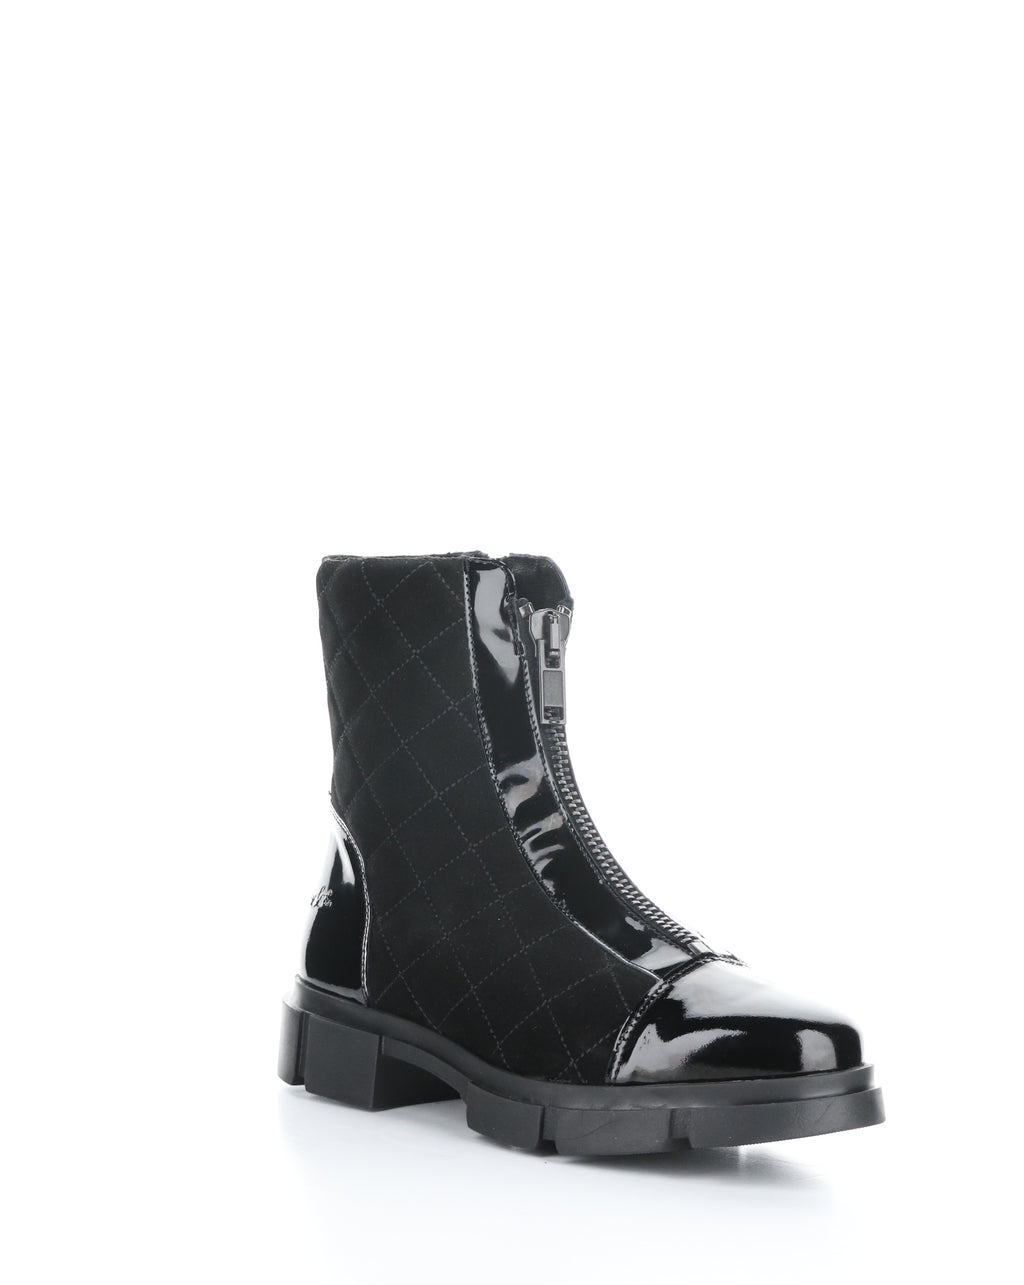 Bos&Co. "Lane" Black Patent/Suede - Waterproof Short Boot